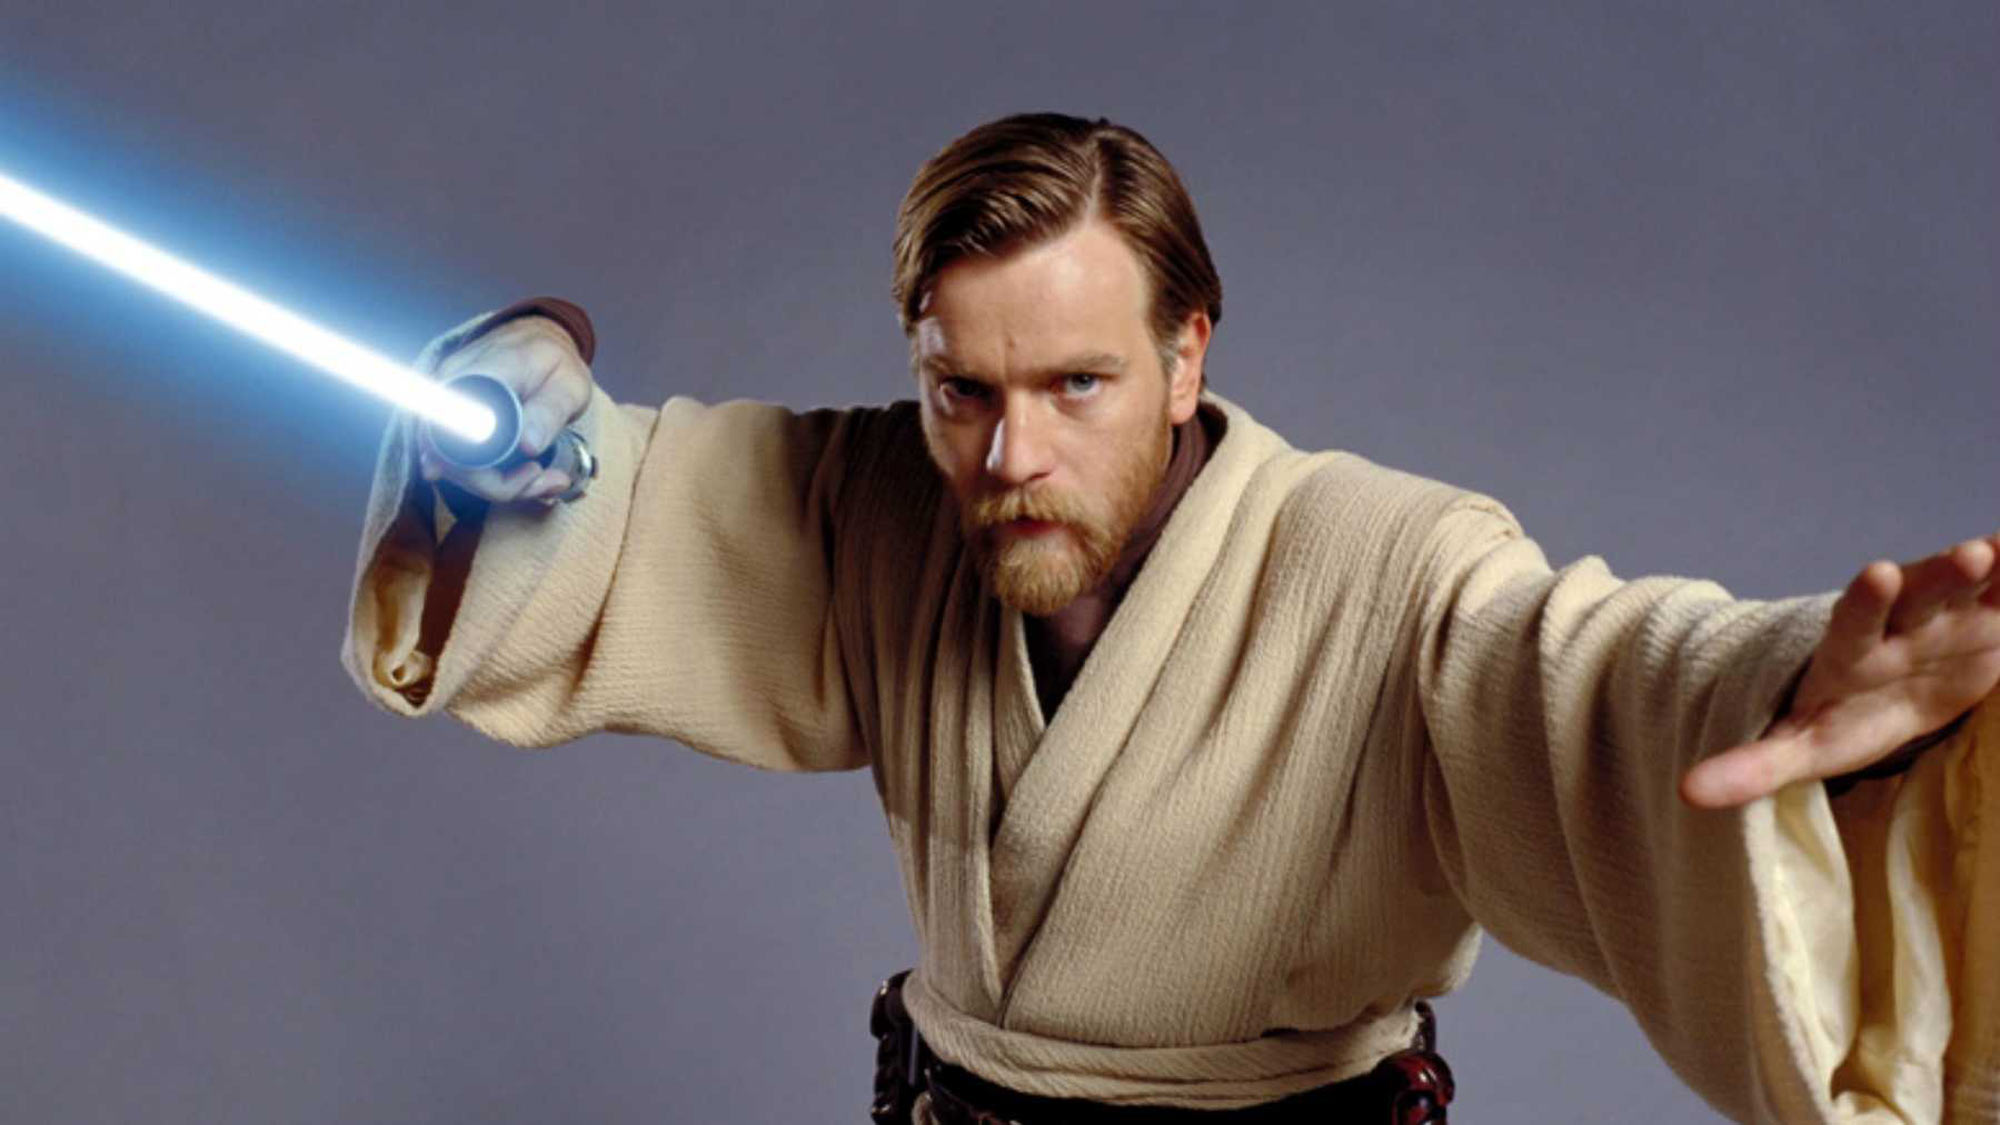 Obi-Wan Series Cast Adds Moses Ingram, Kumail Nanjiani